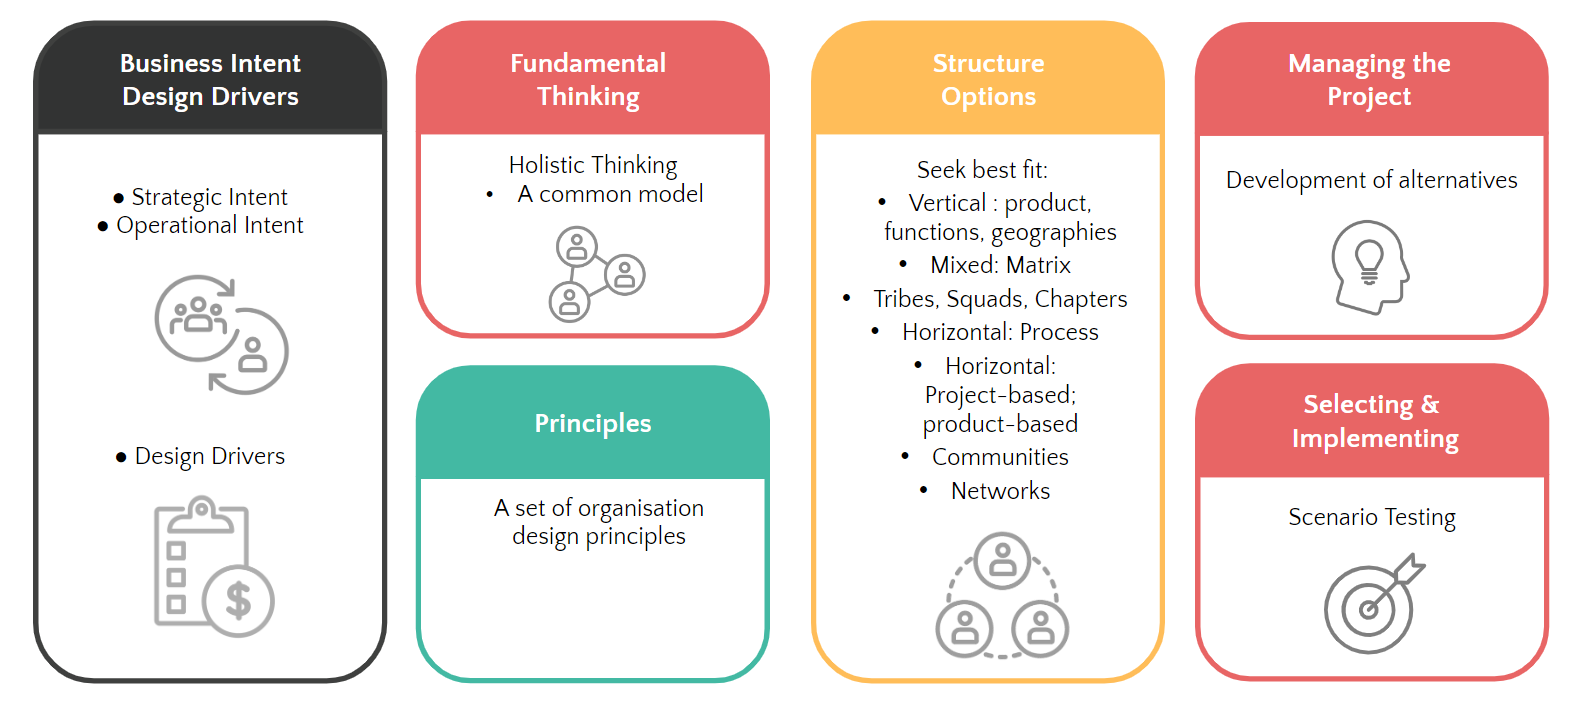 Organisation Design - 6 key aspects framework